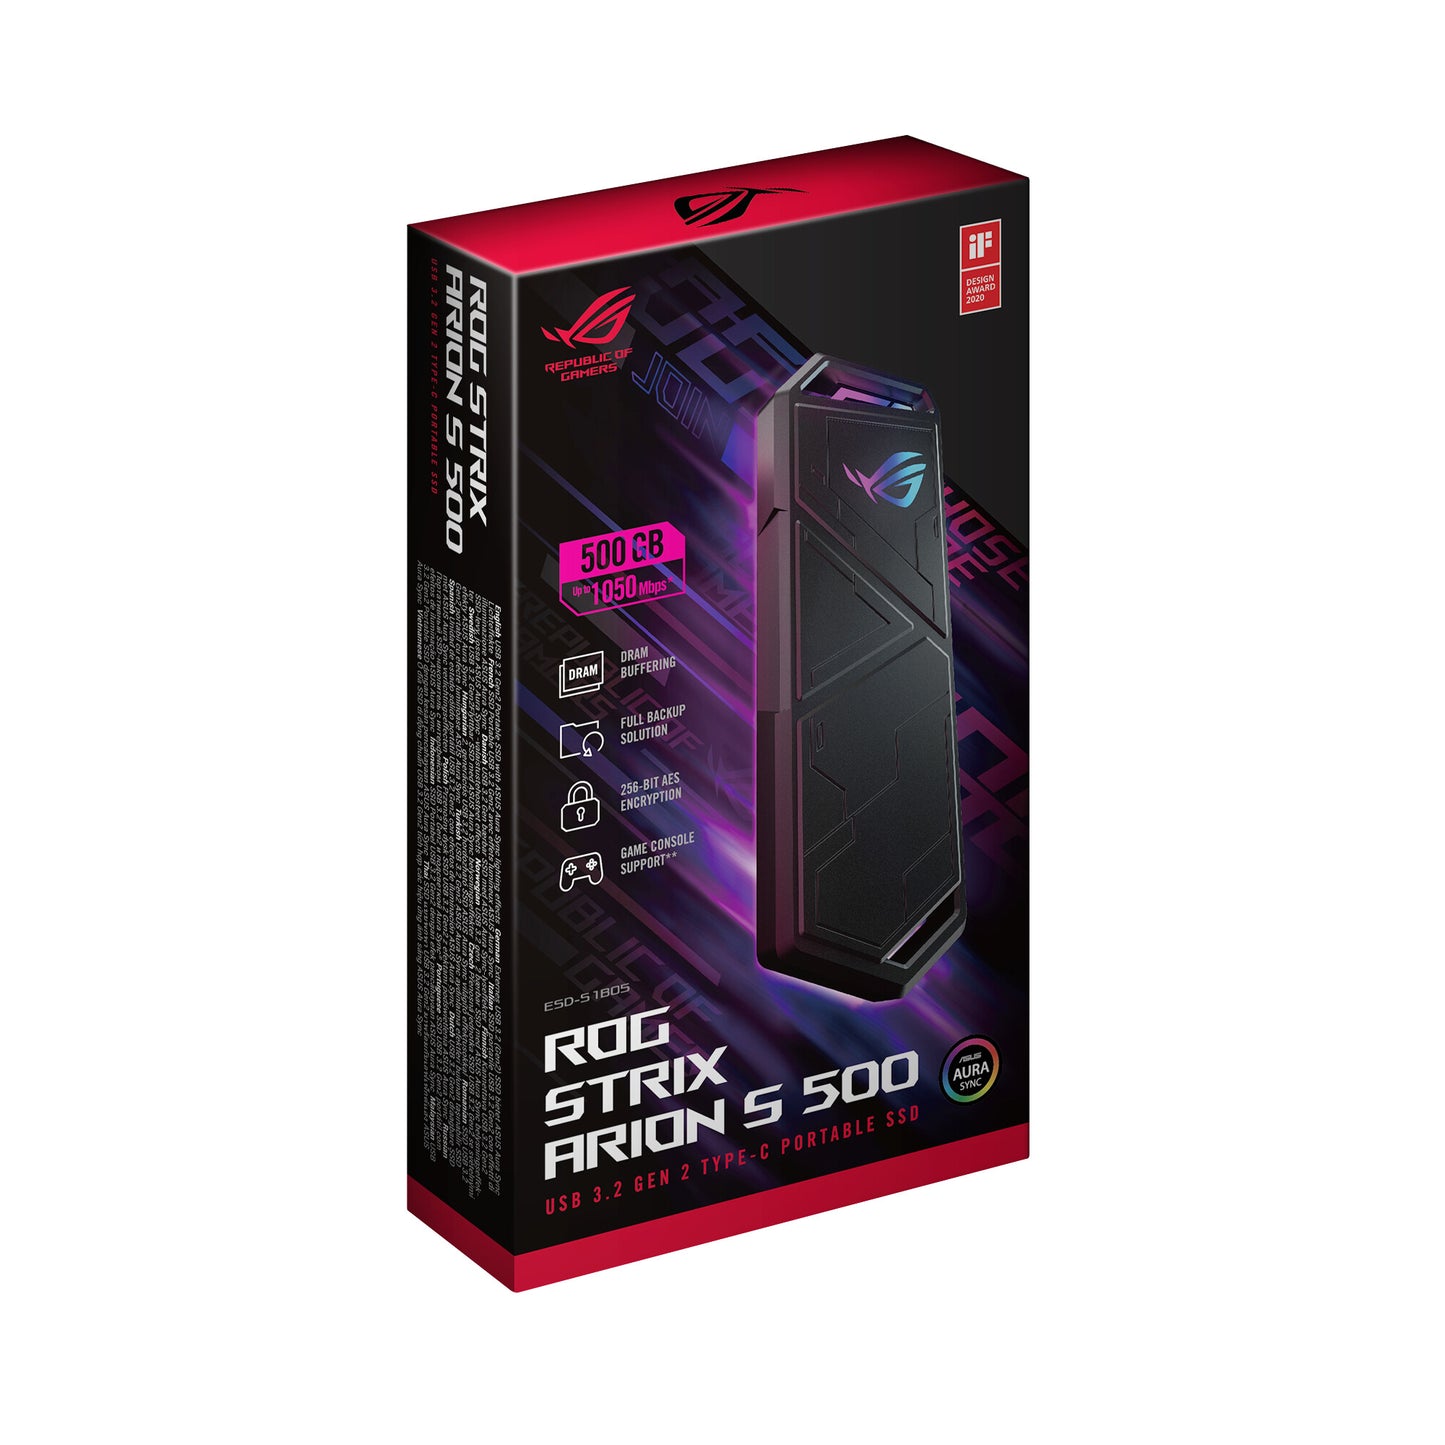 ASUS ROG Strix Arion S500 500 GB Black